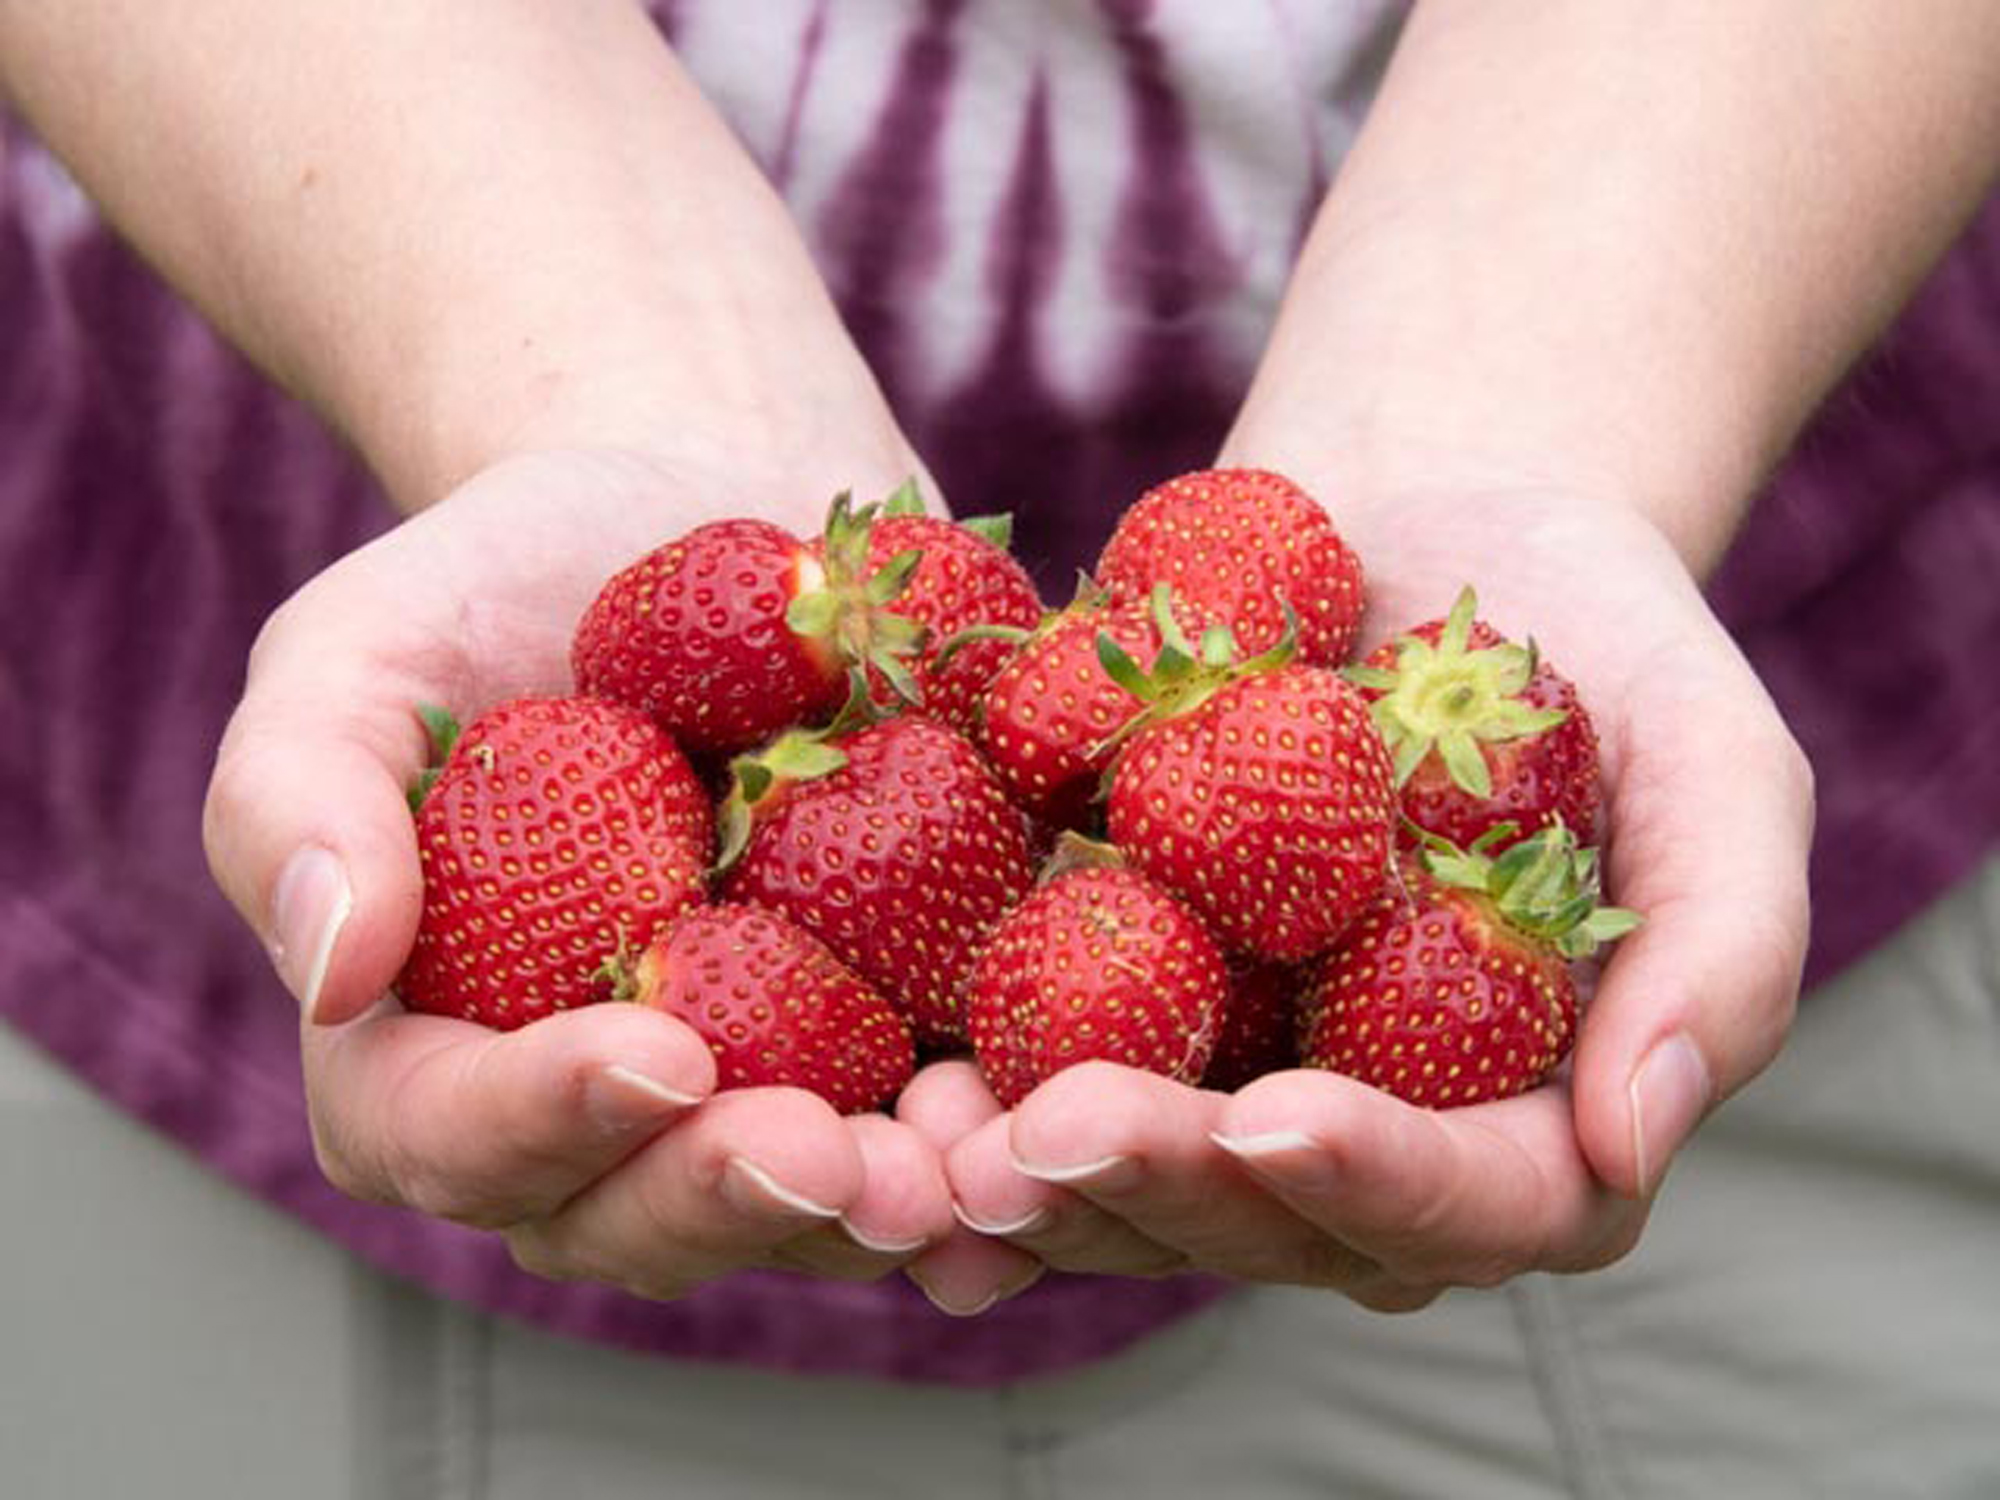 https://images.squarespace-cdn.com/content/v1/58fe3c496b8f5bf31bd239f6/1561476255756-XALUFPU1MIDEIIDYBNLL/new-york-state-berry-growers-association-how-to-destem-a-strawberry.jpg